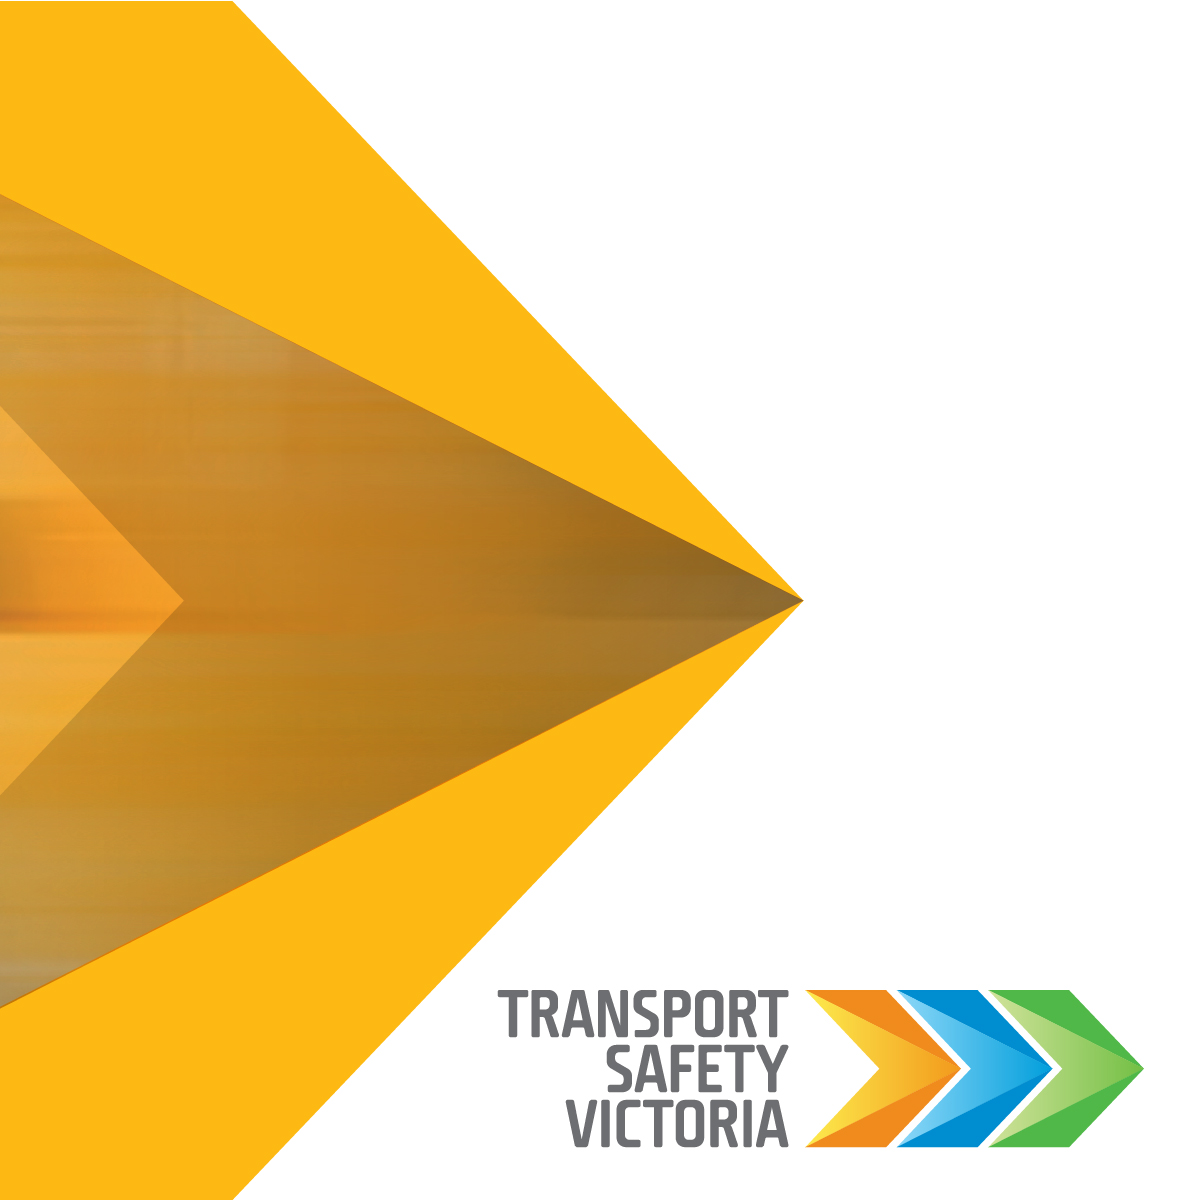 Transport Safety Victoria Government Initiative Corporate Identity Design